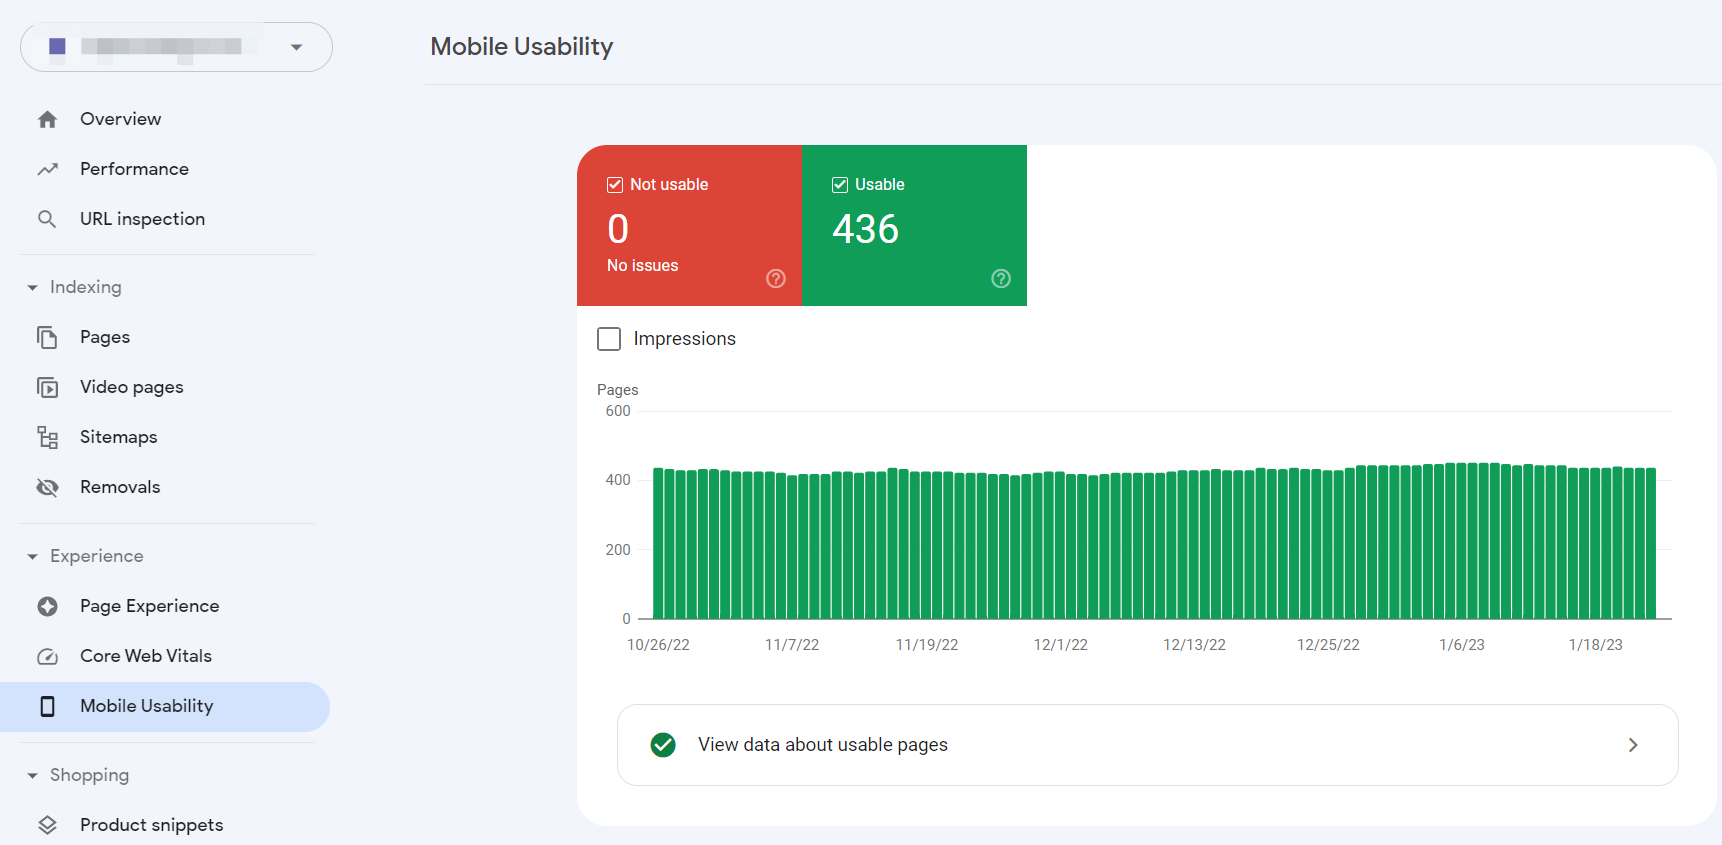 Mobile usability